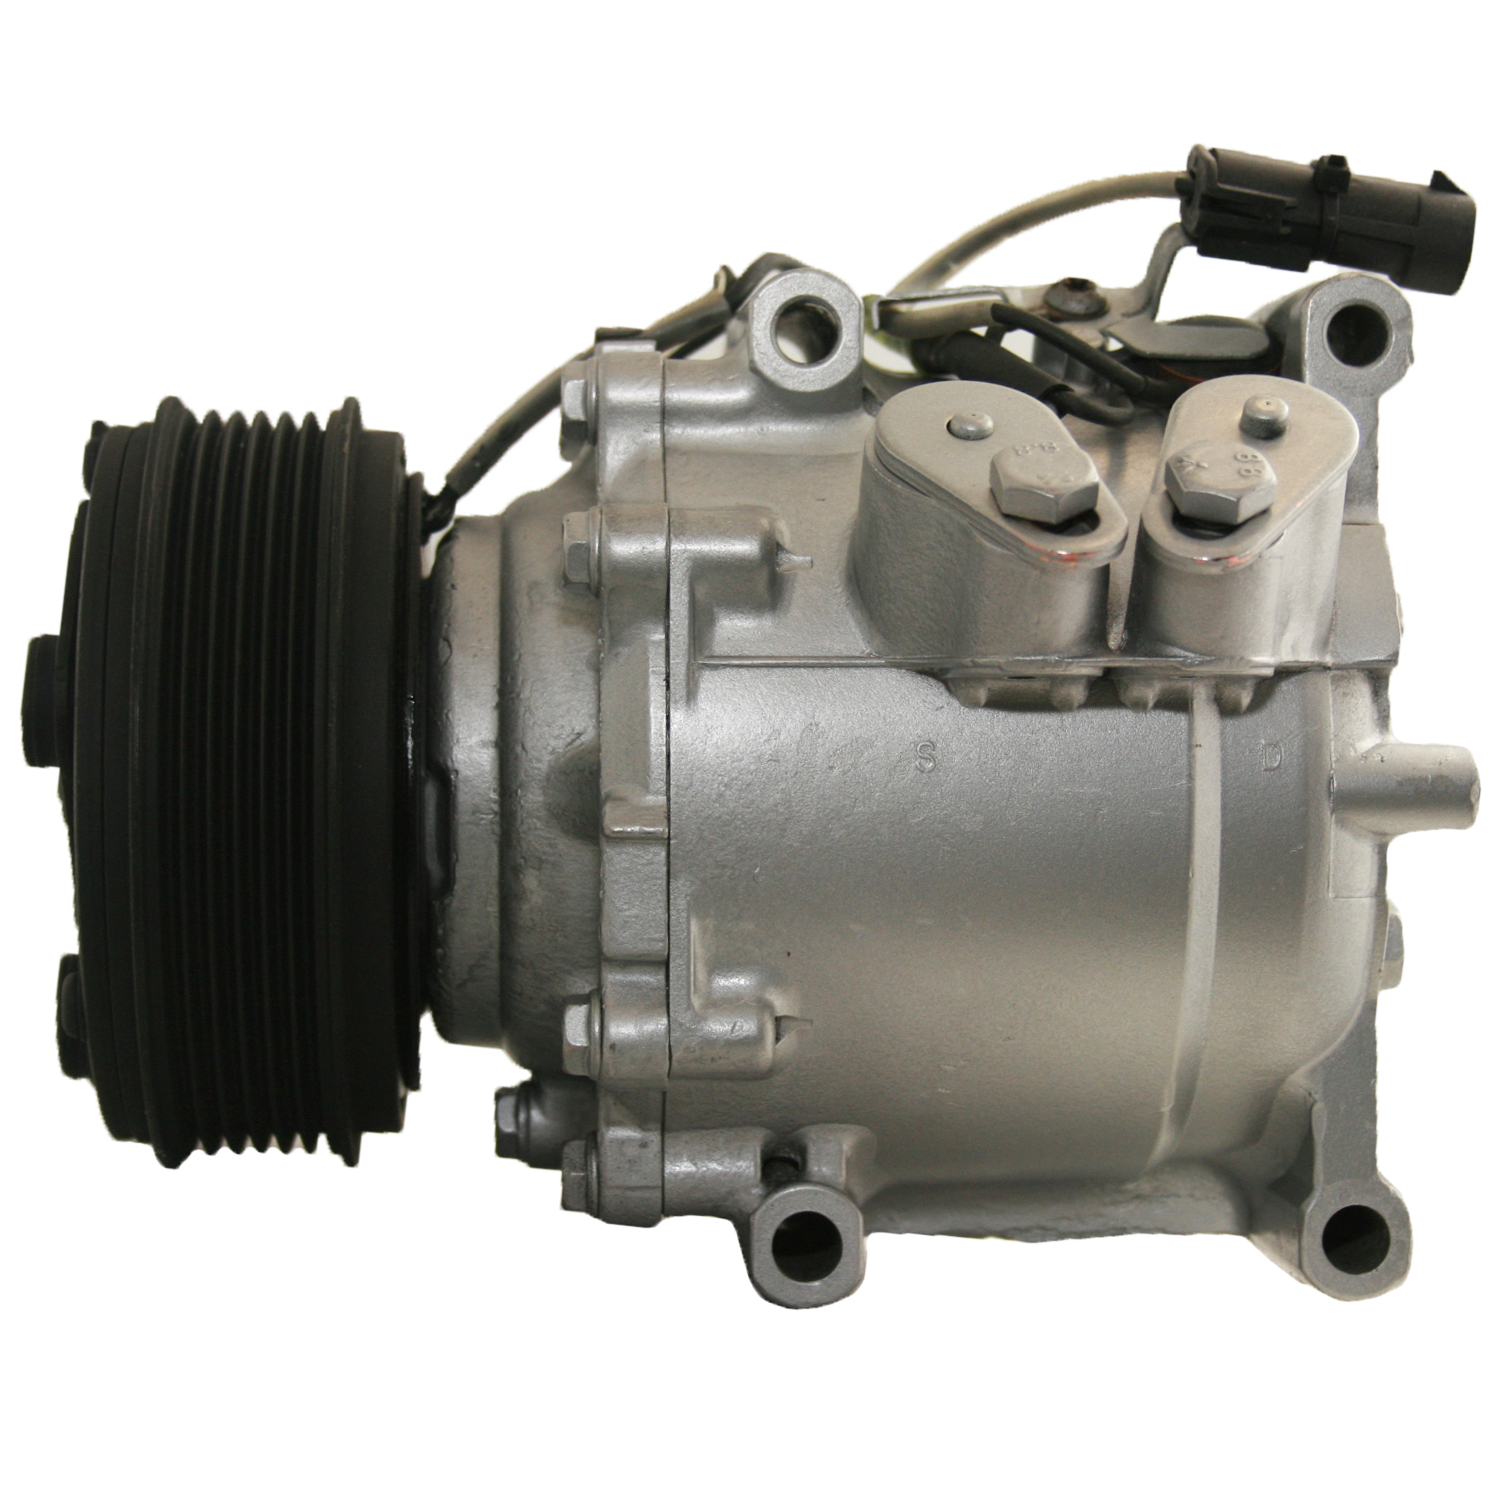 TCW Compressor 40861.601 Remanufactured